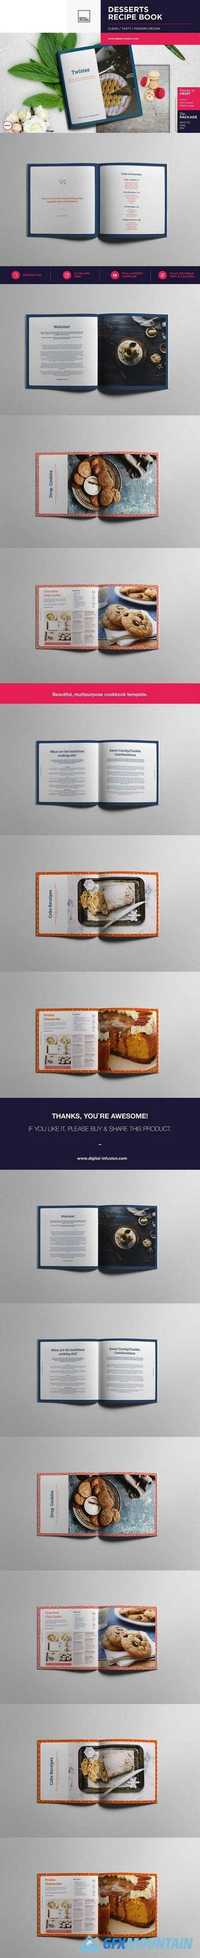 Twistee — Desserts Recipe Book 1211849